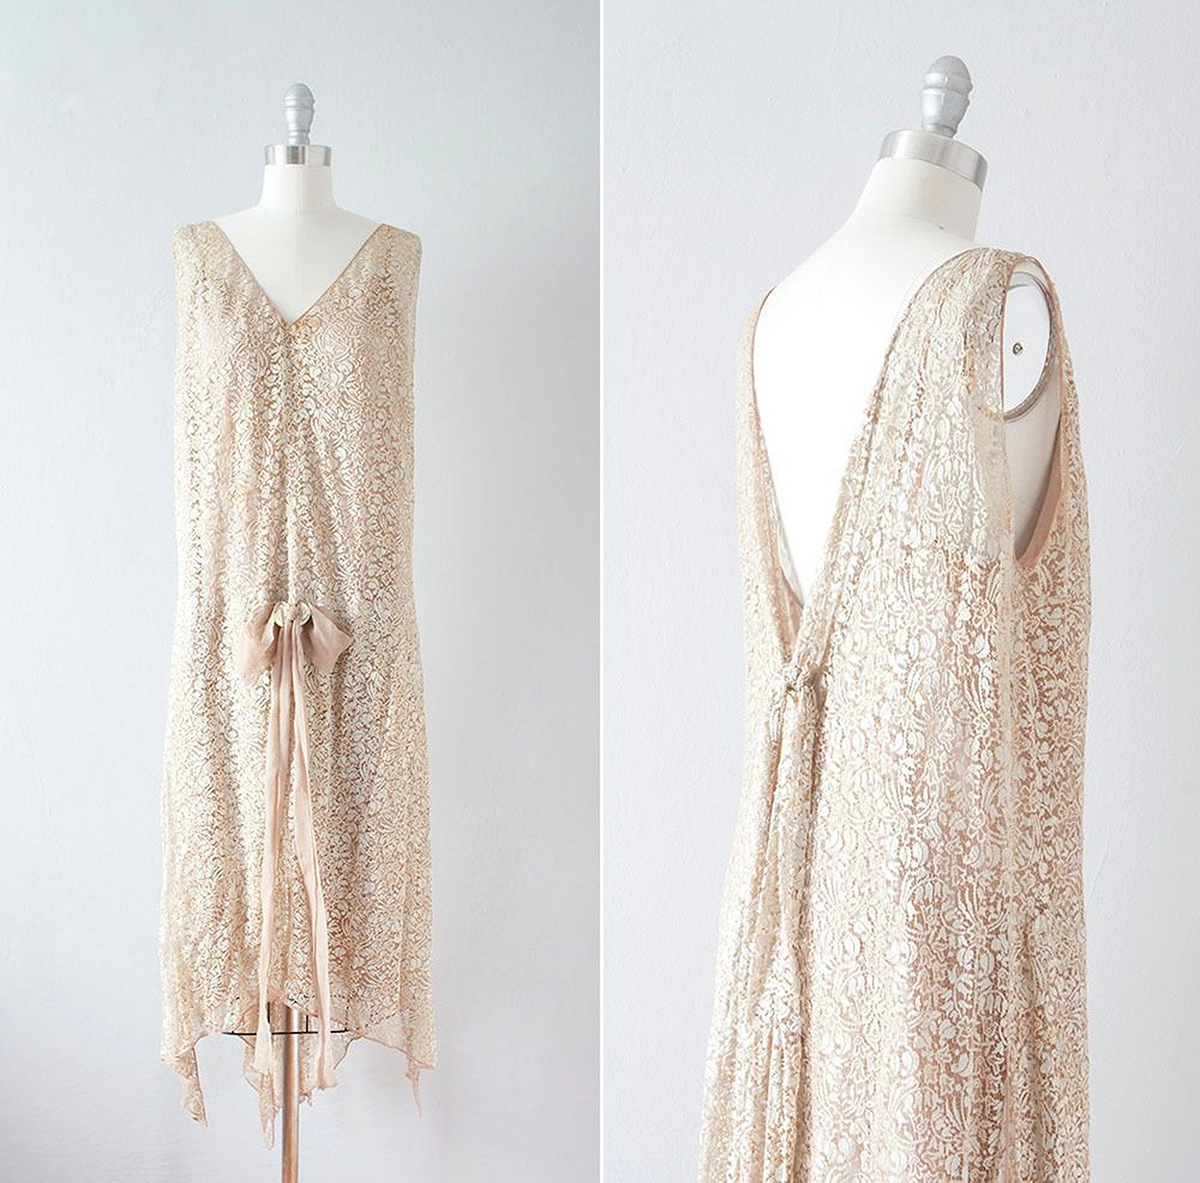 Lucien Lelong lace dress, 1920s, $31,000. Courtesy of Etsy